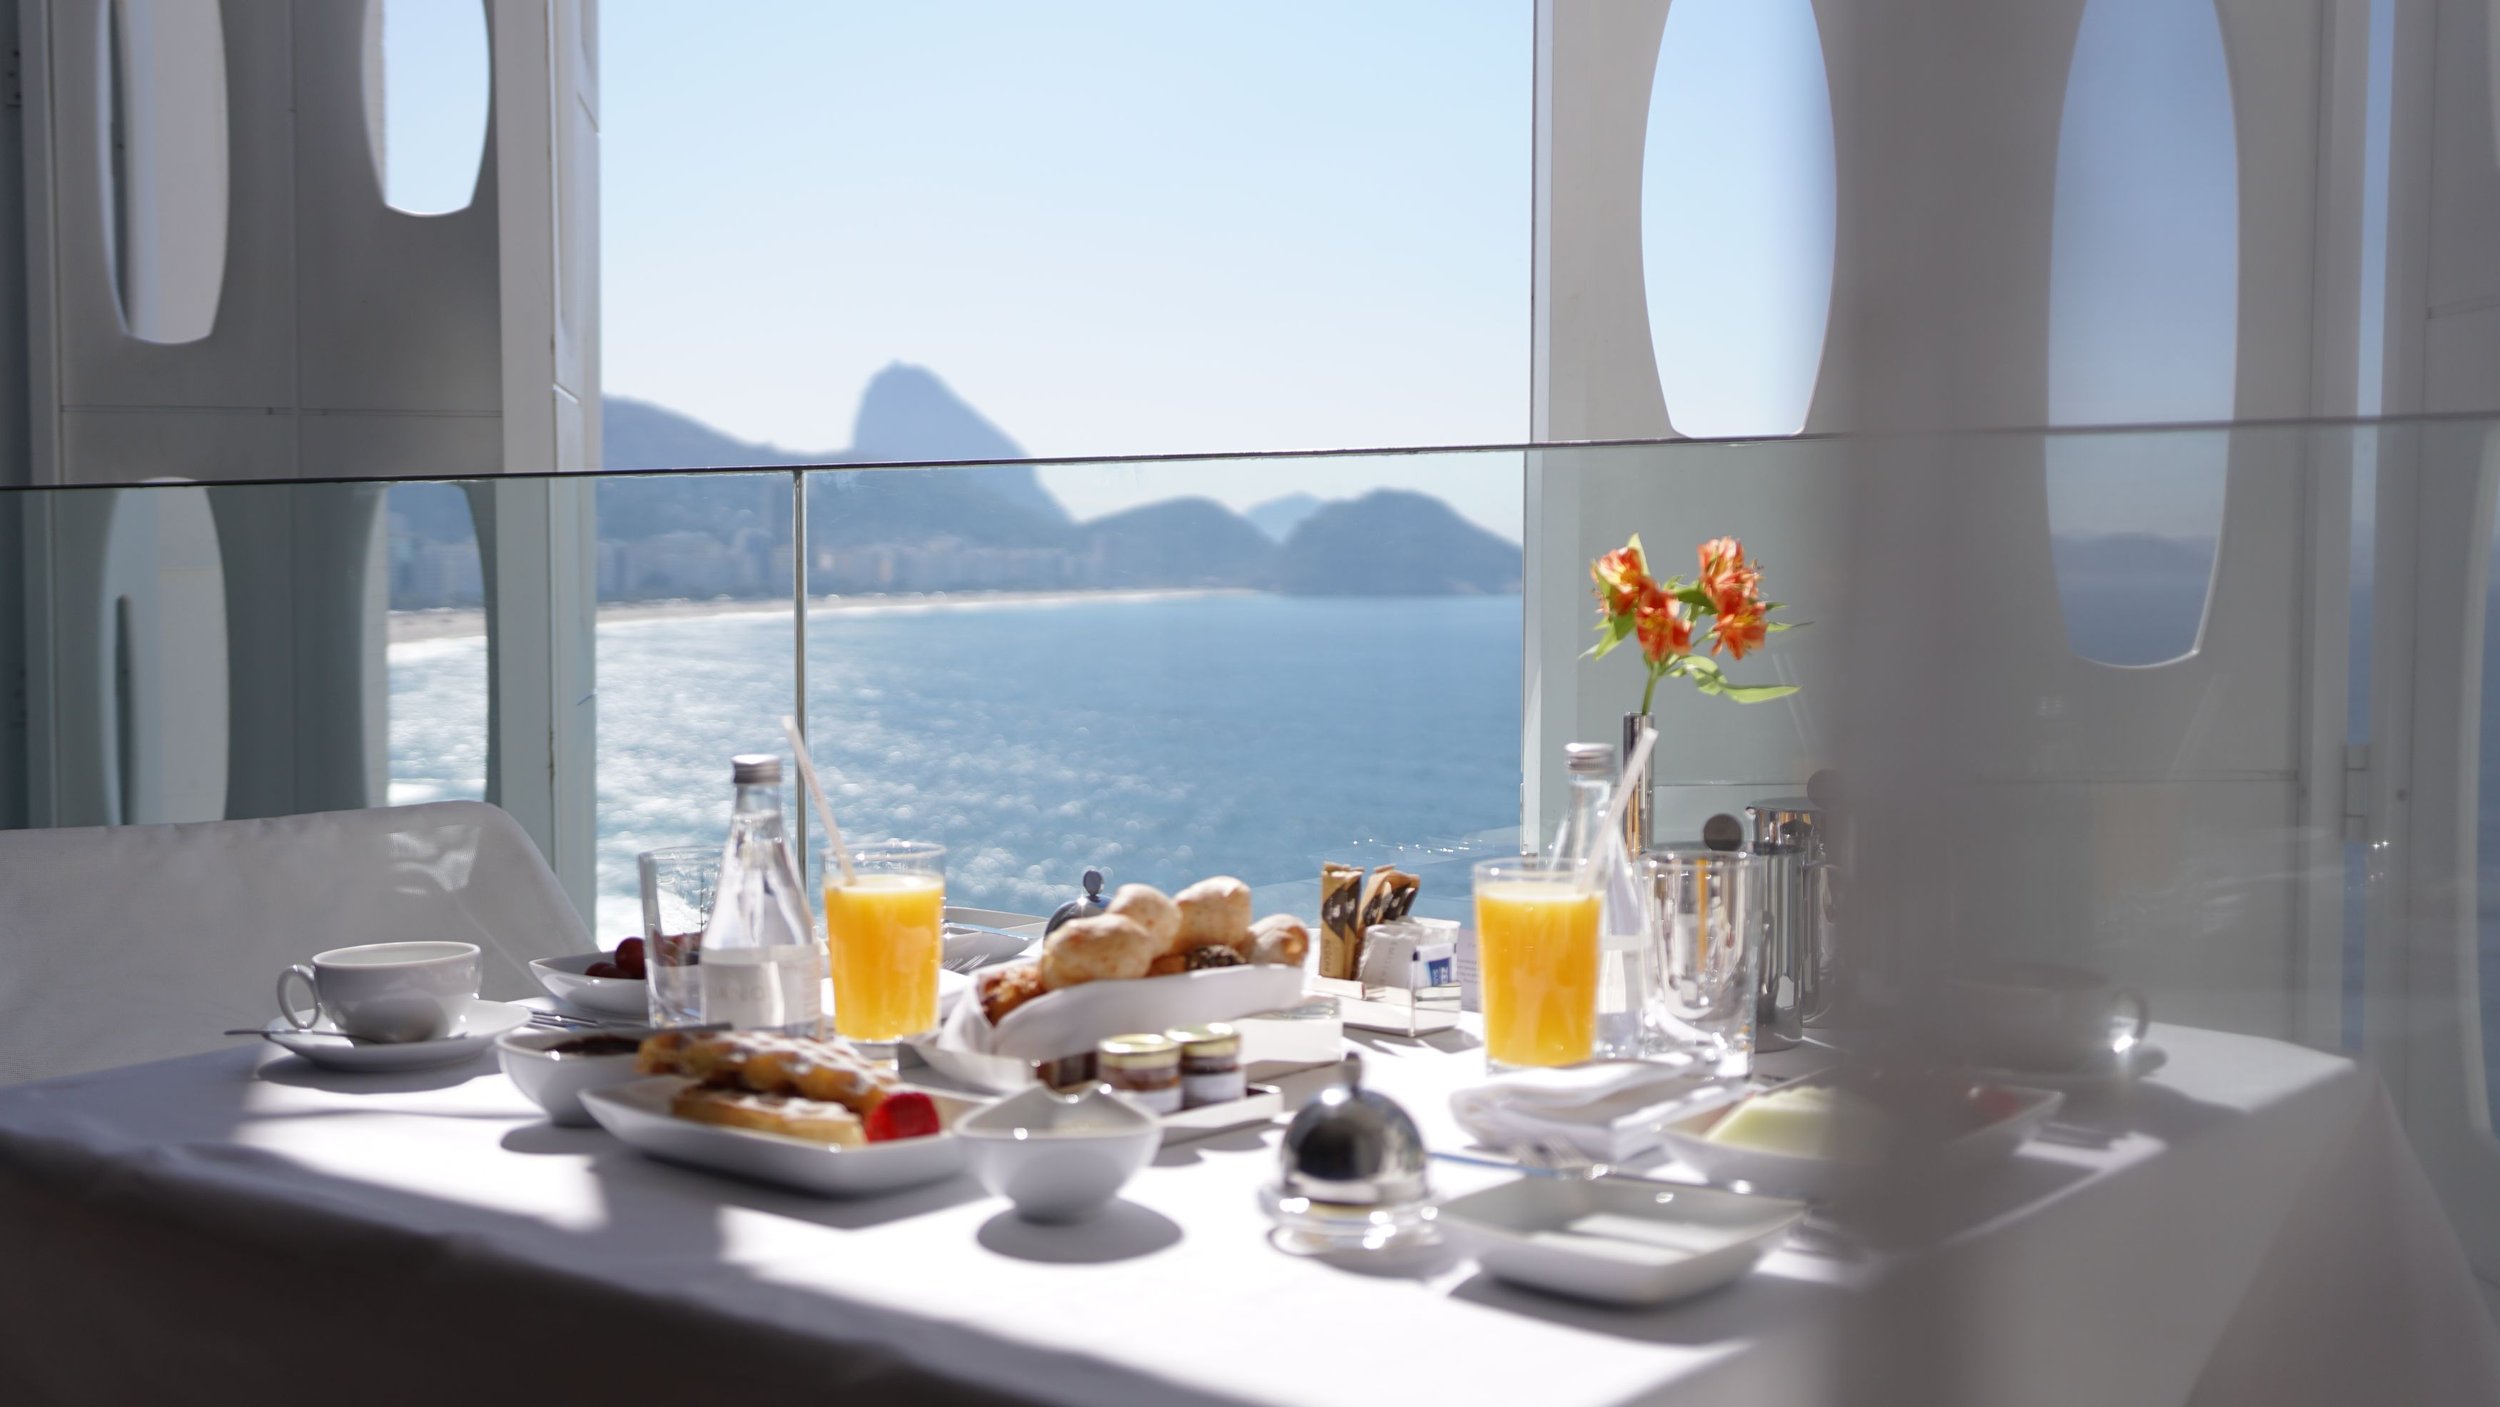 Emiliano Rio de Janeiro, Copacabana Beach - Hotel Windows - The Most Perfect View (23).jpg